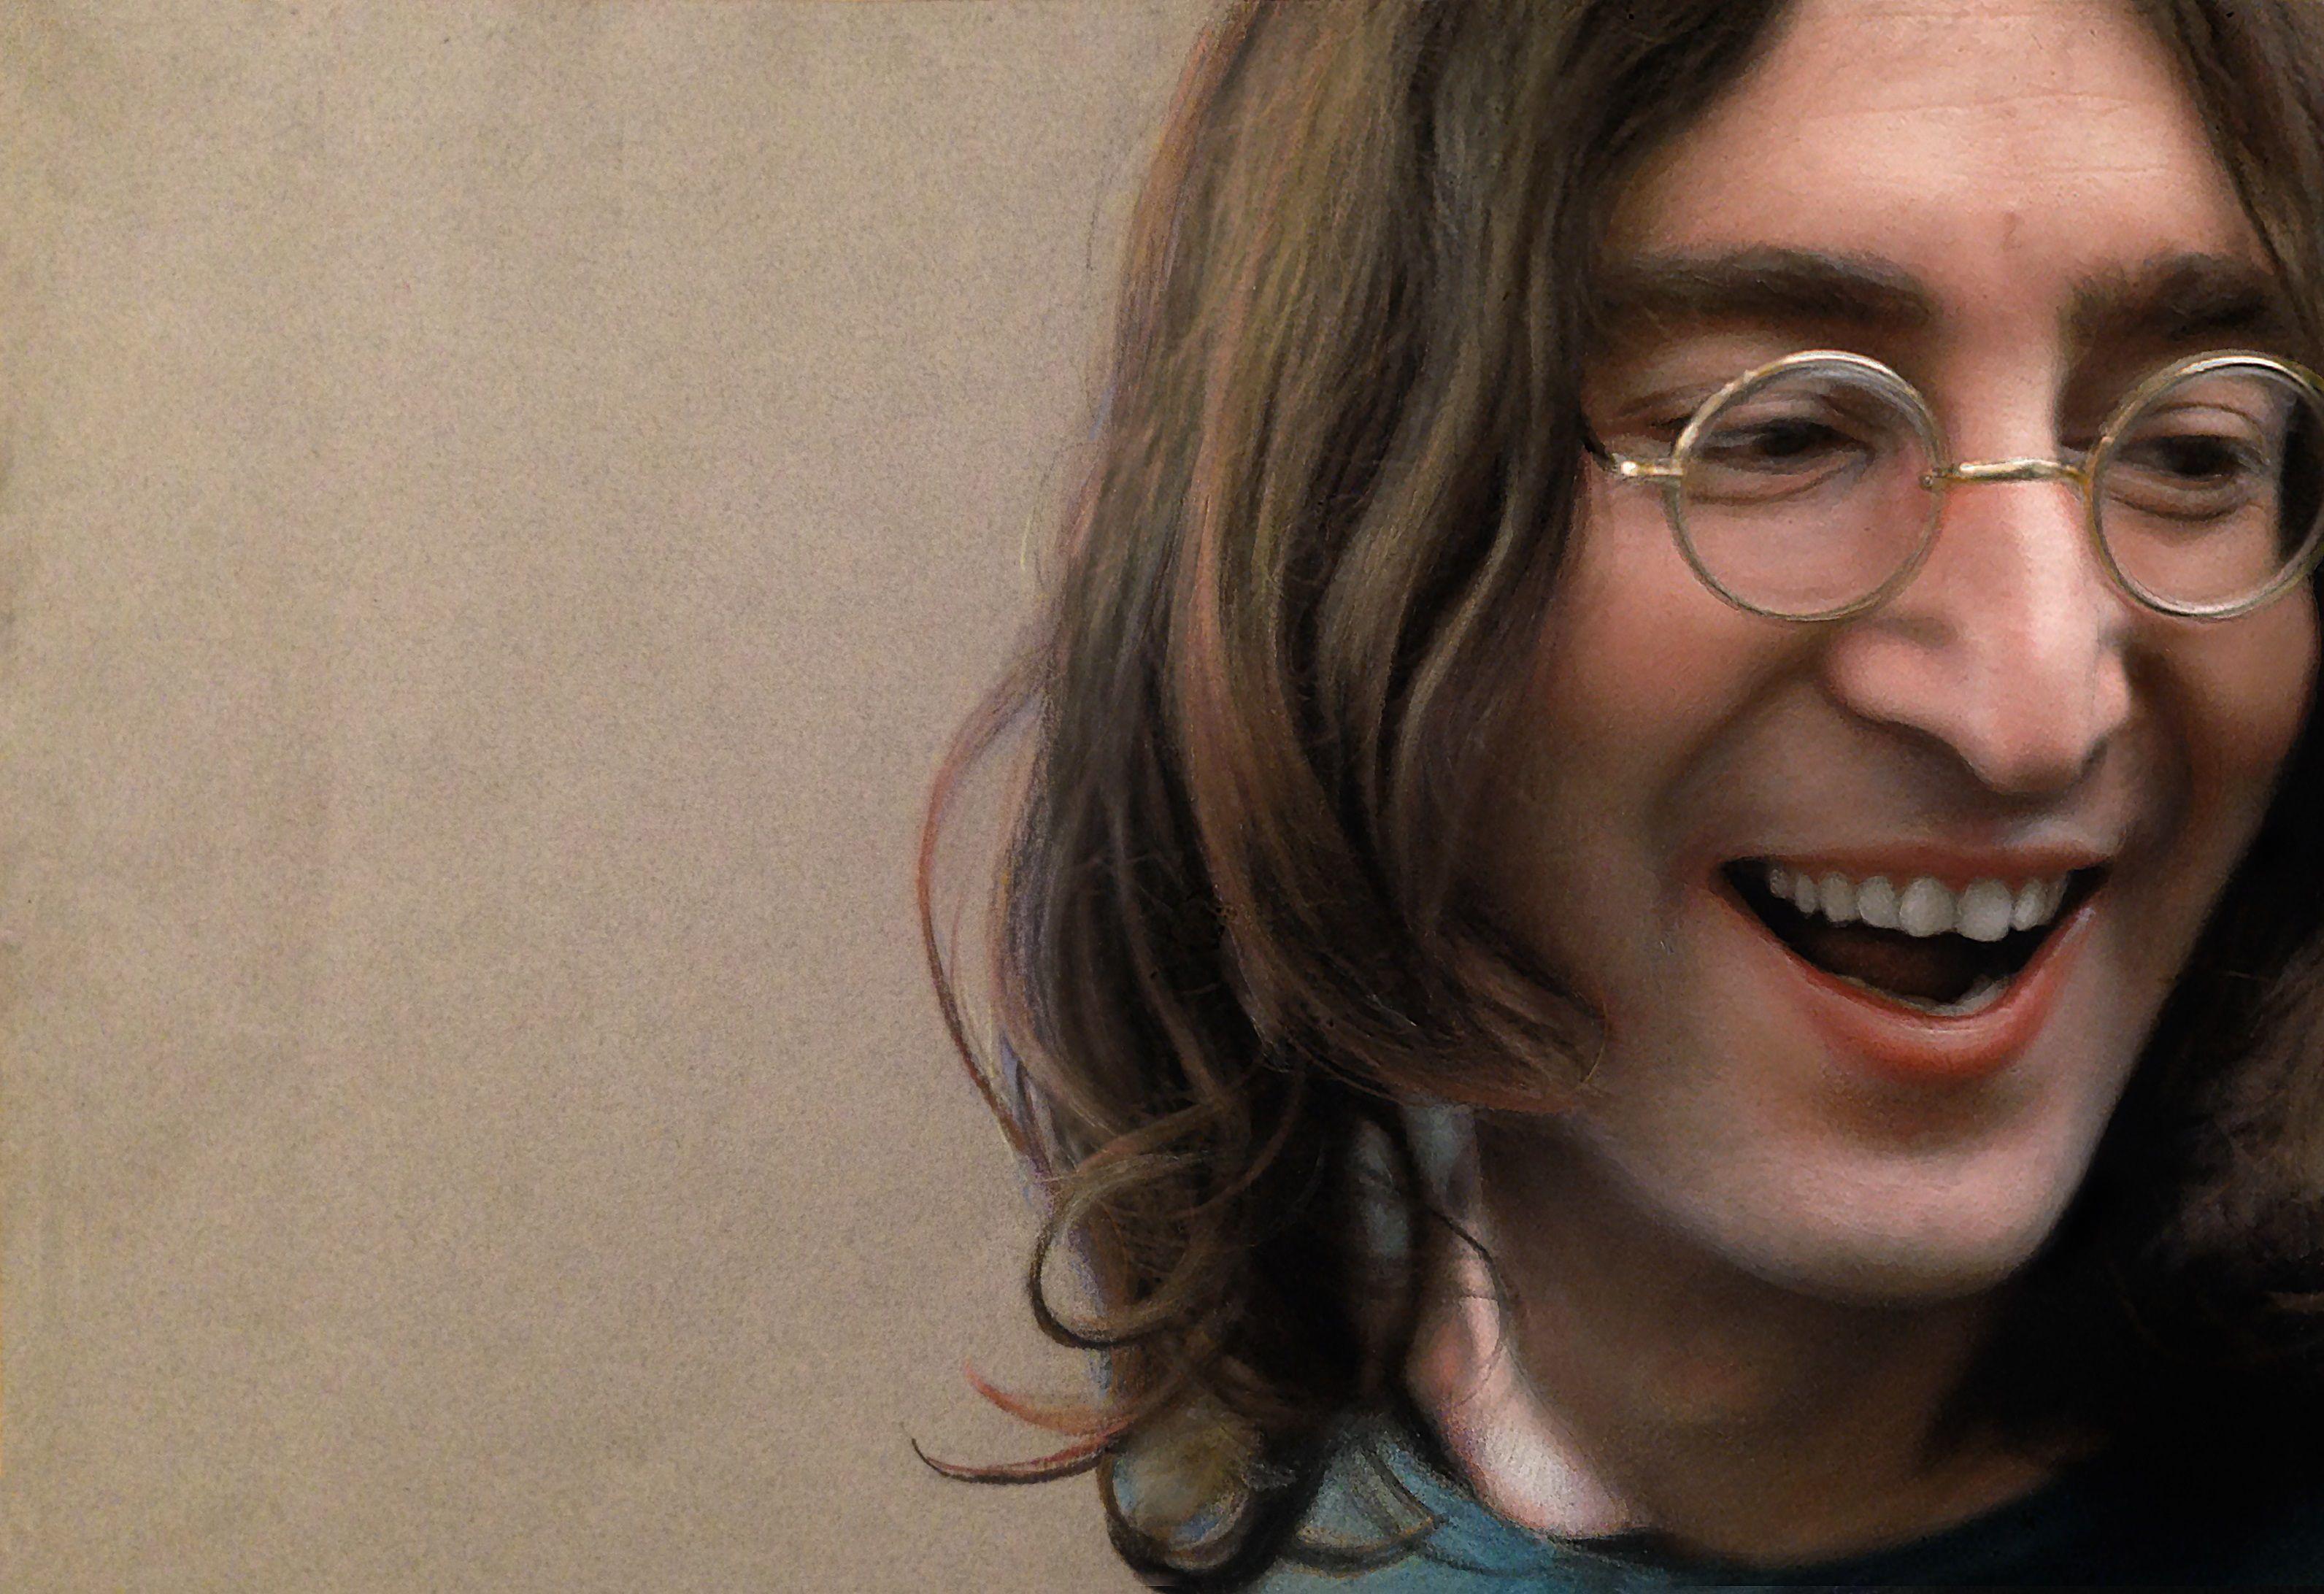 John Lennon Wallpaper Image Photo Picture Background. HD